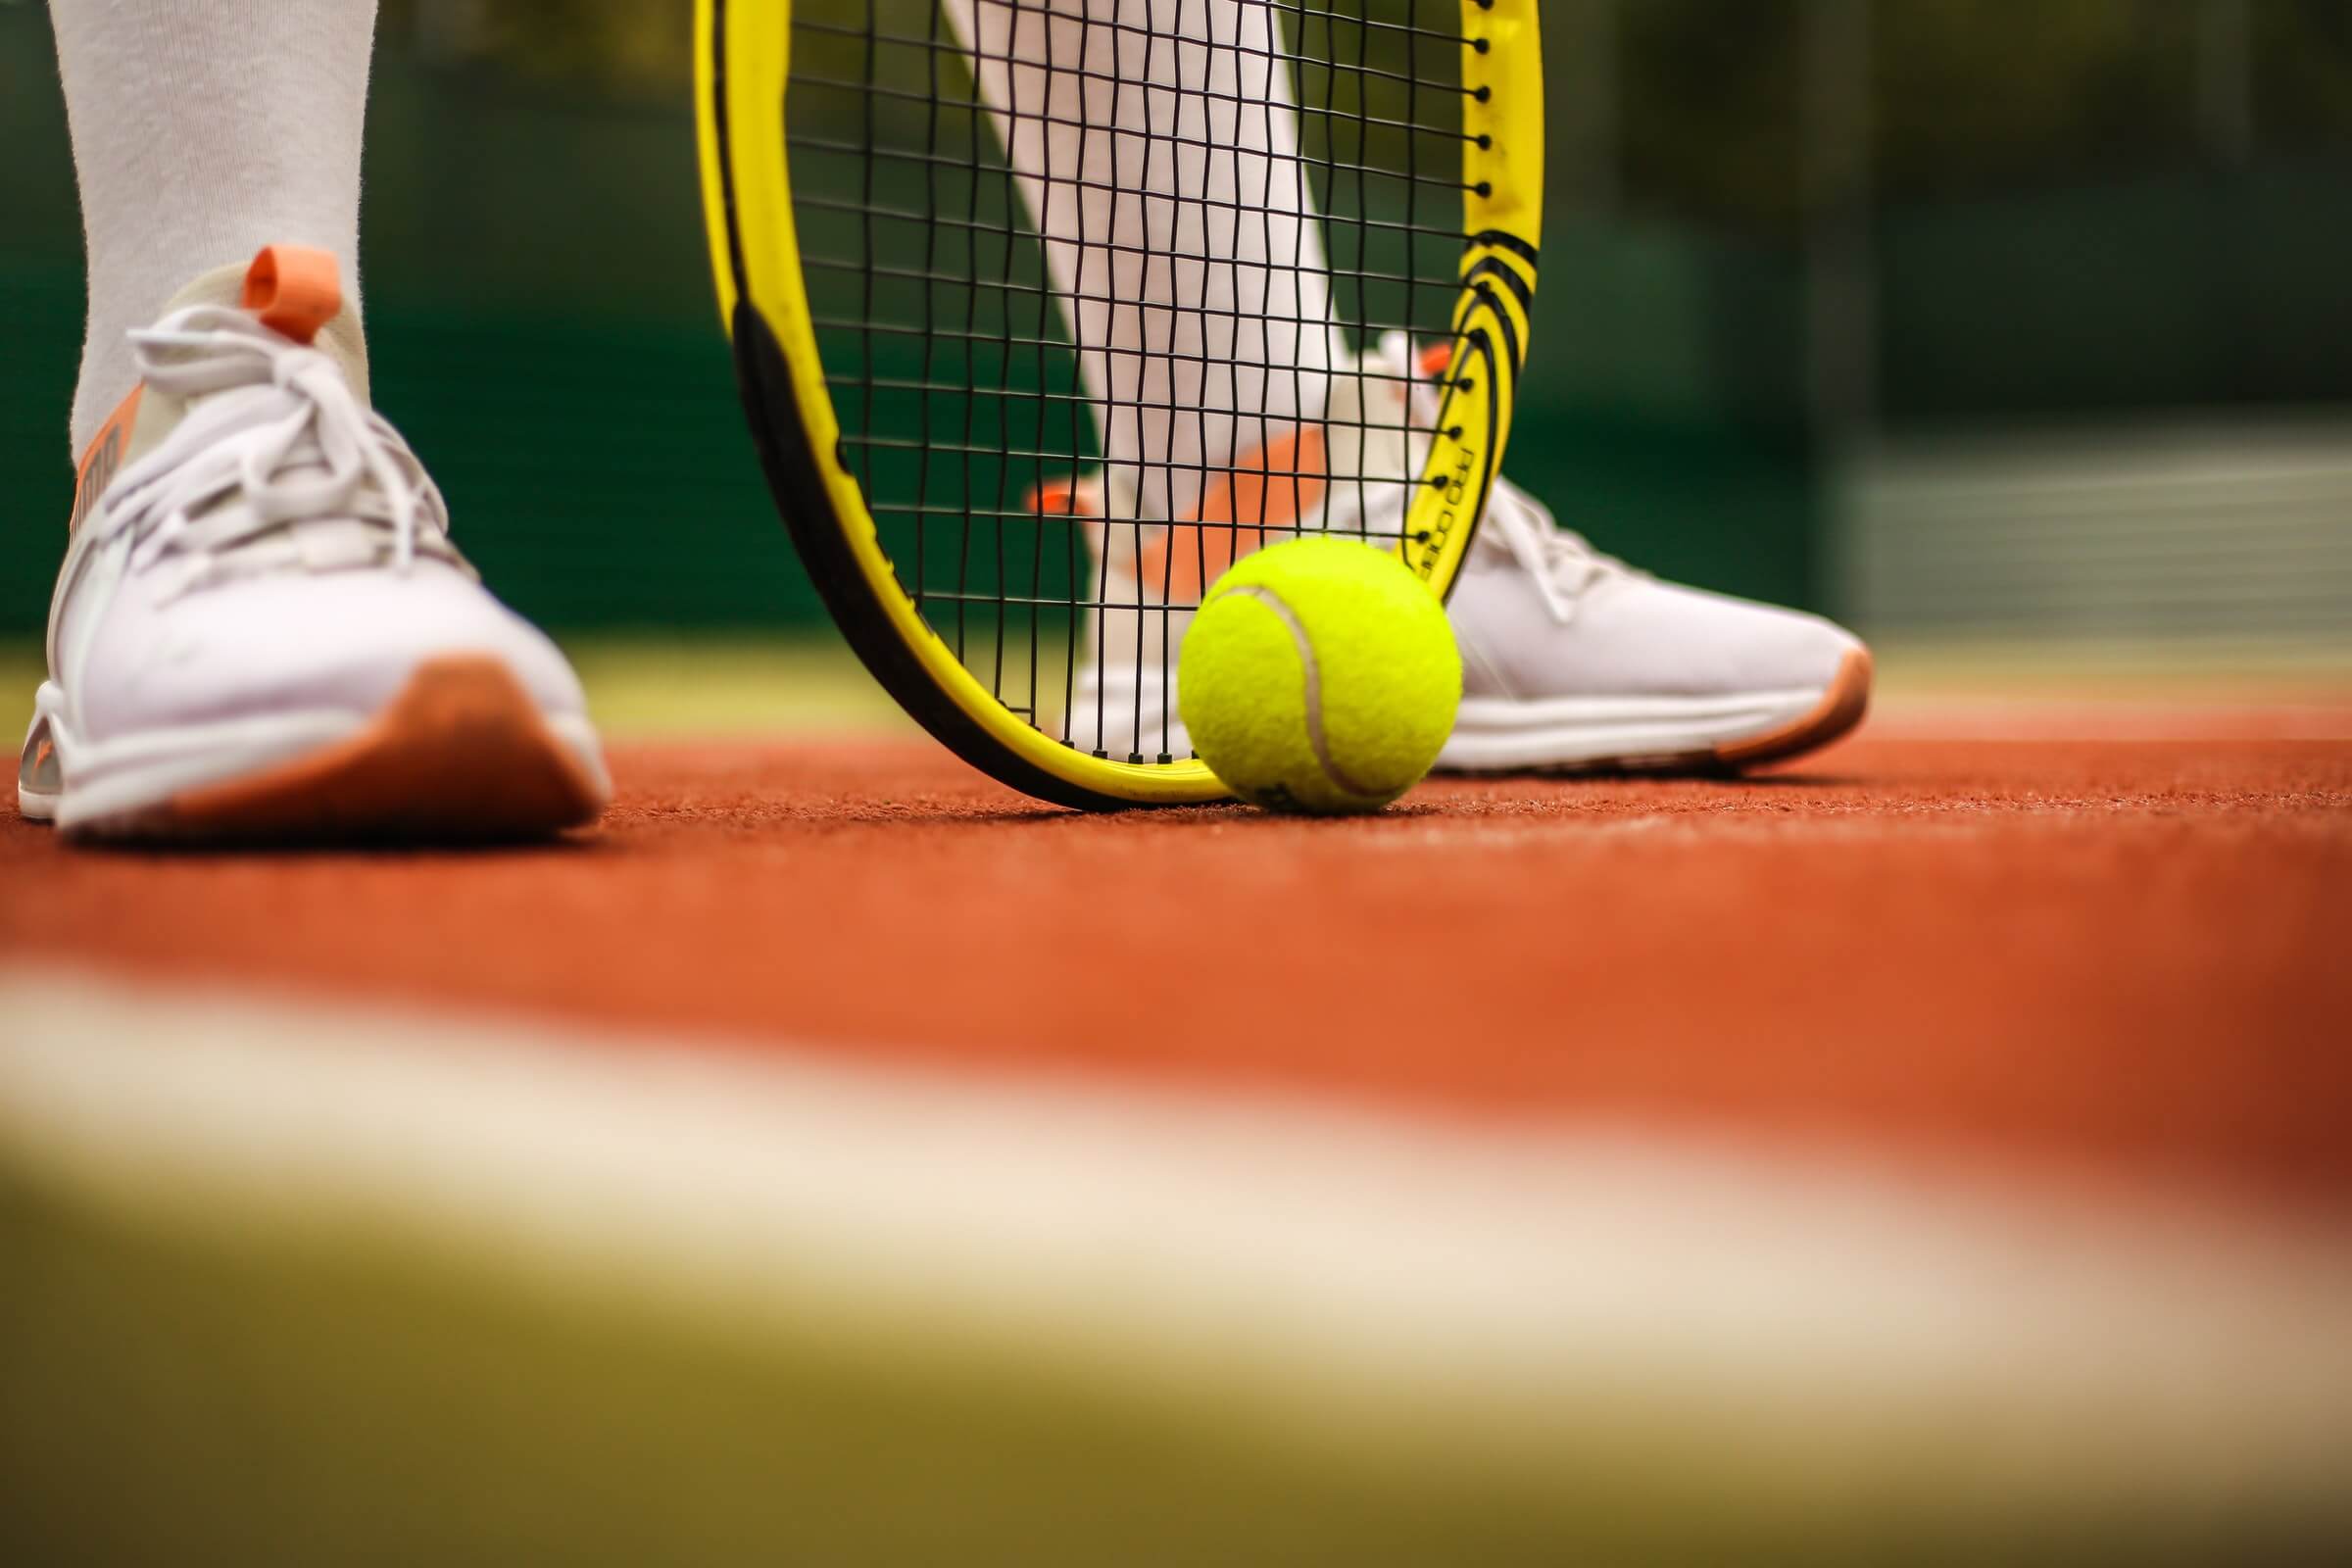 Close up of tennis player's feet standing over tennis ball